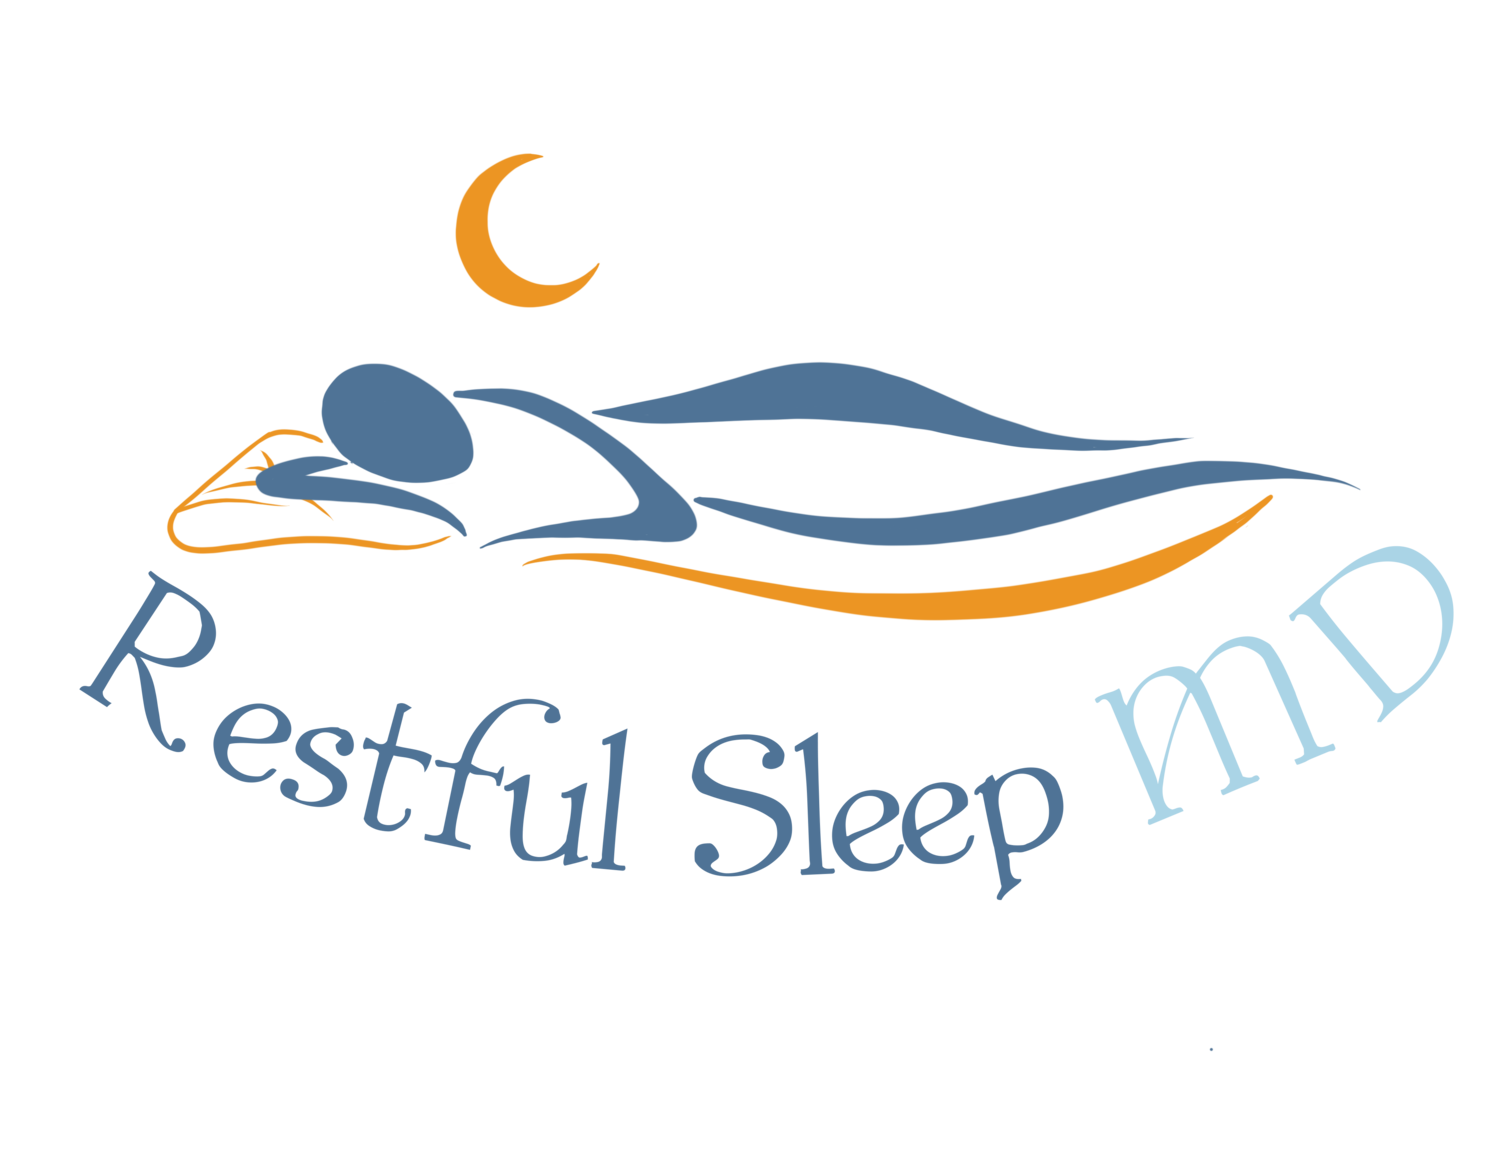 Restful Sleep MD